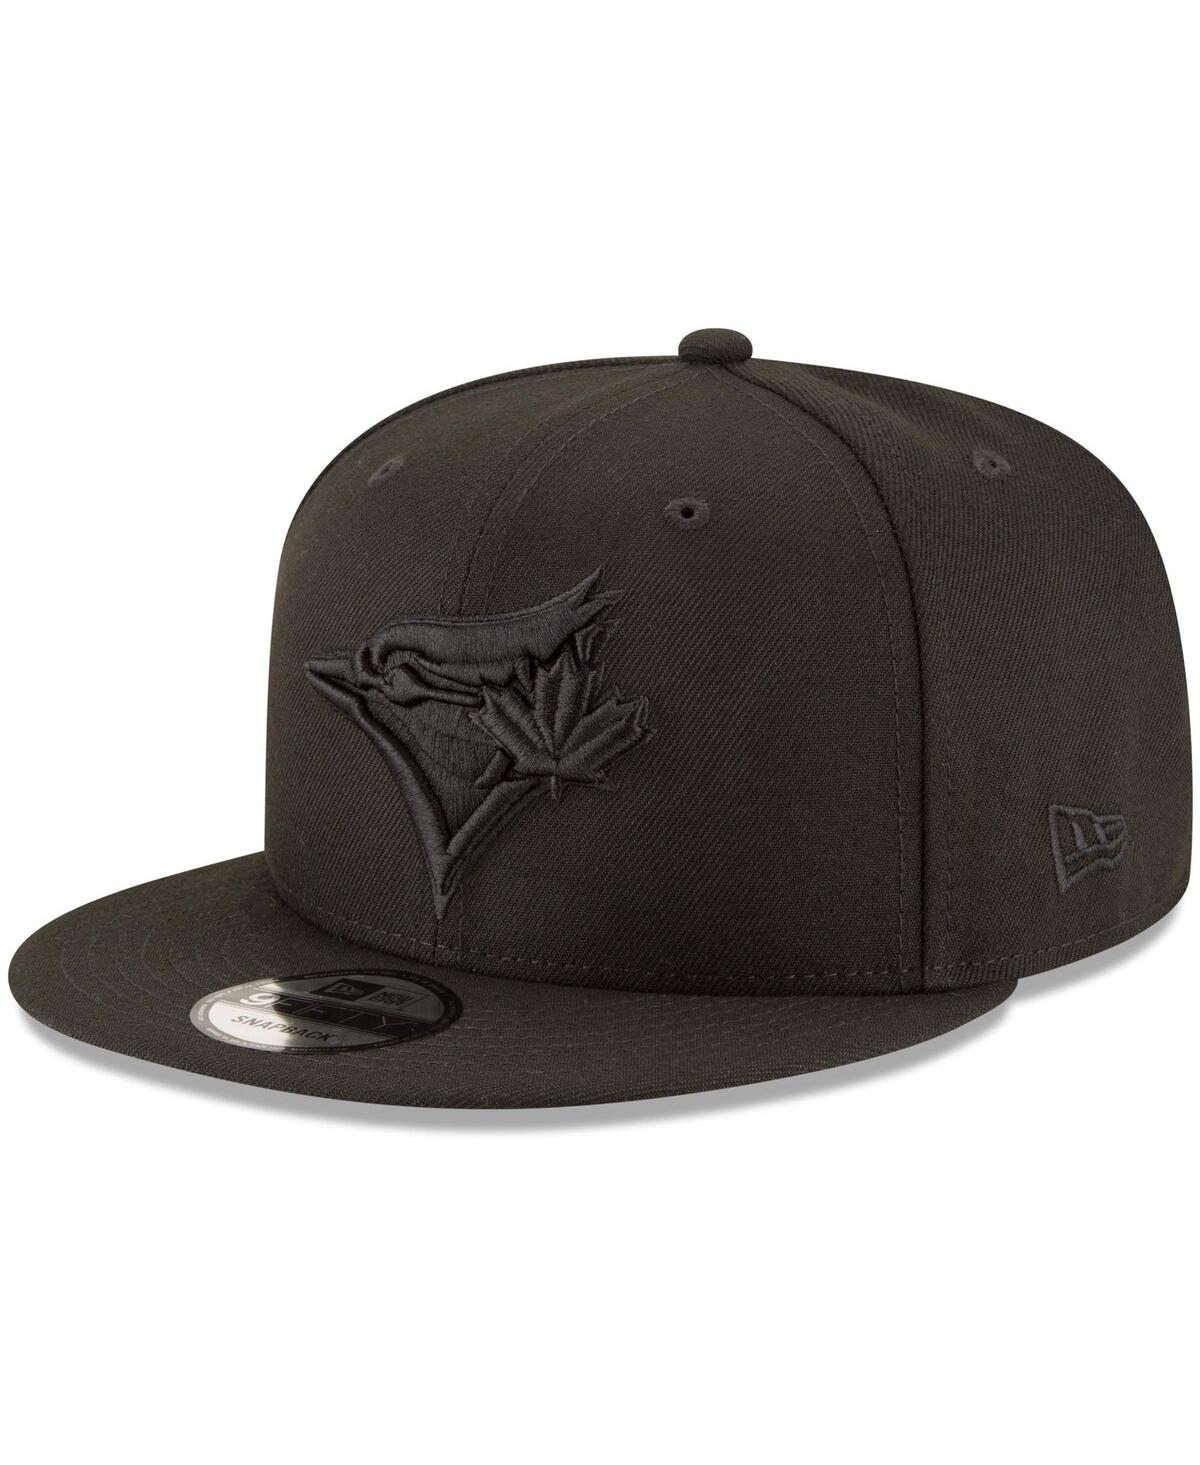 Men's Toronto Blue Jays New Era Black on Black 9FIFTY Team Snapback Adjustable Hat - Black - Black